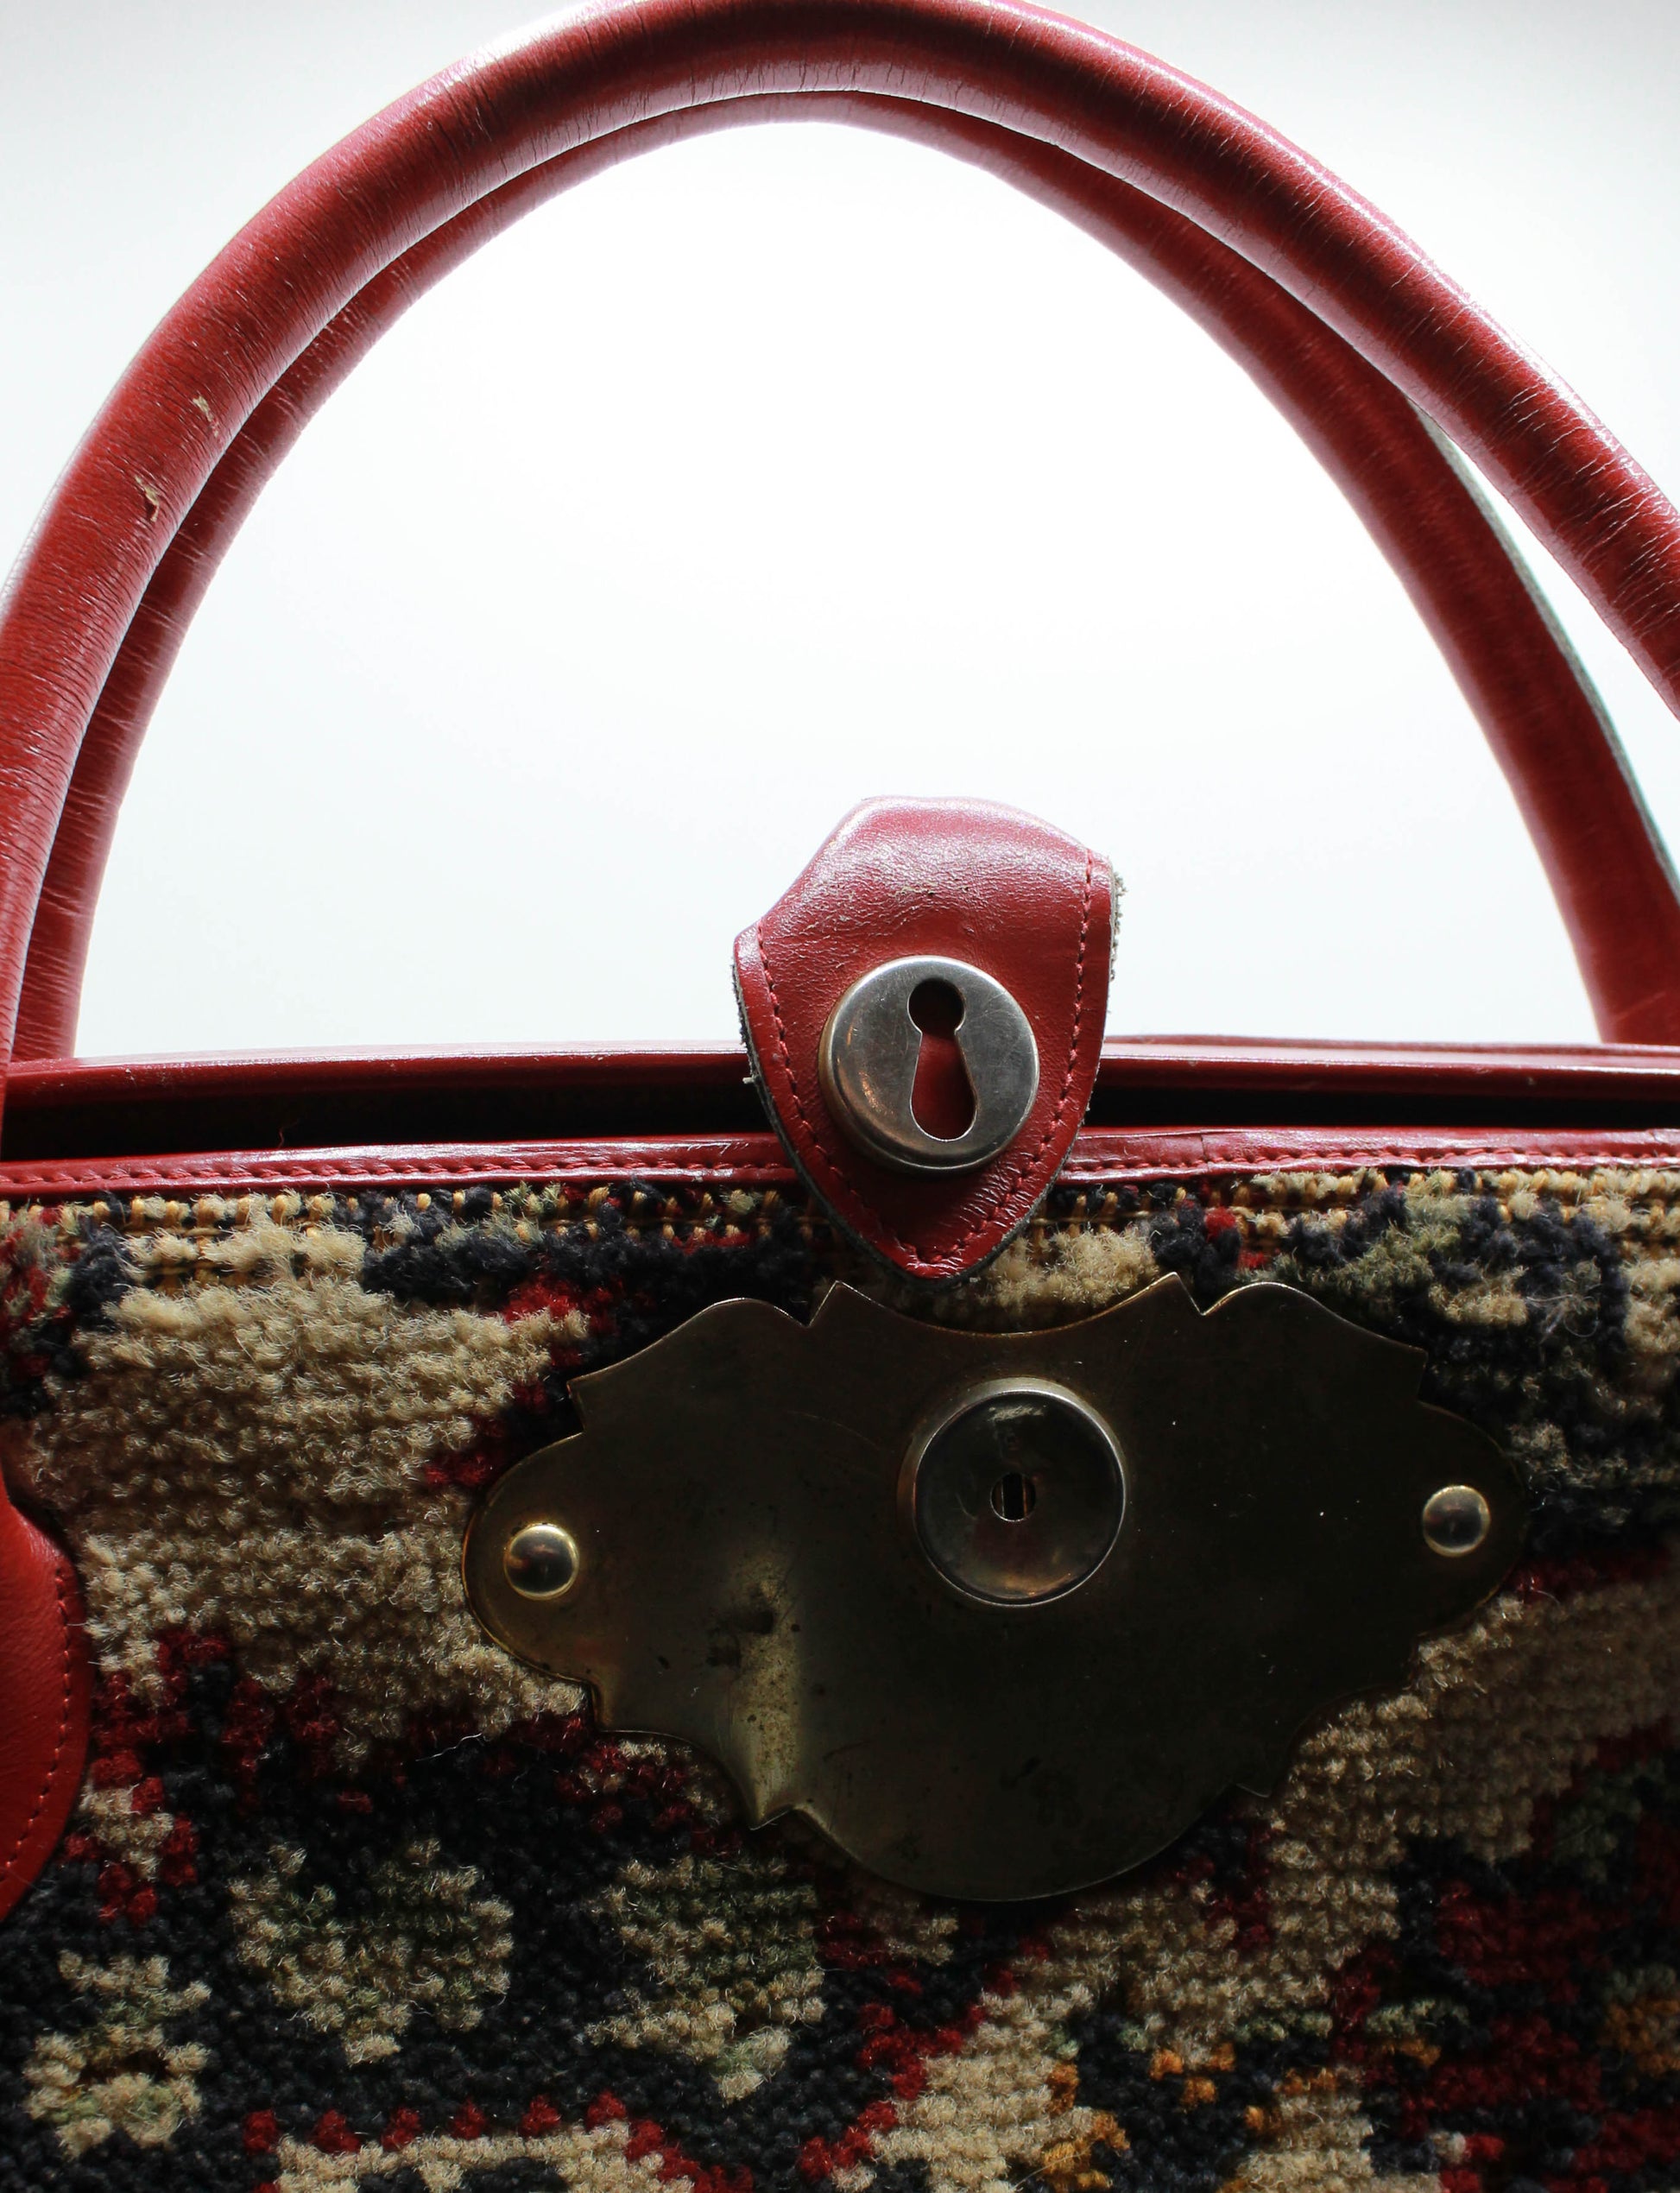 Vintage 60's Floral Carpet Bag Purse Red Leather Trim